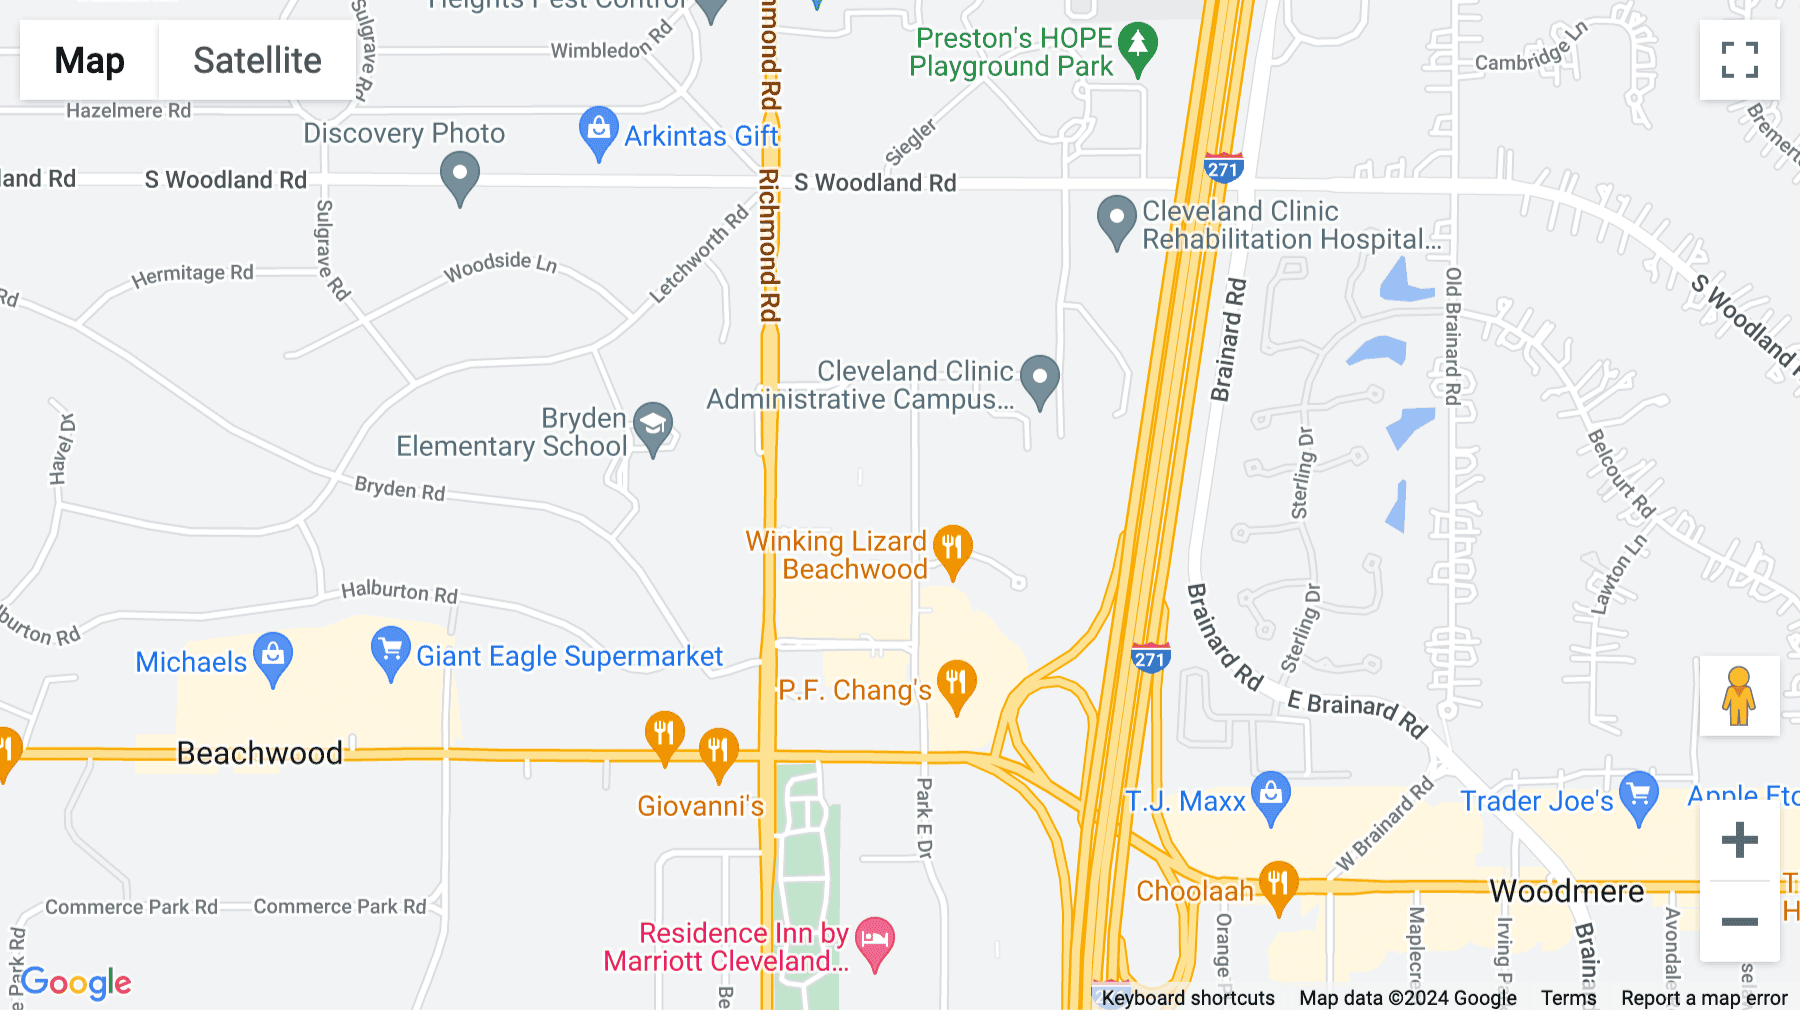 Click for interative map of 3401 Enterprise Parkway, Suite 340, Enterprise Place, Beachwood, Ohio, Beachwood